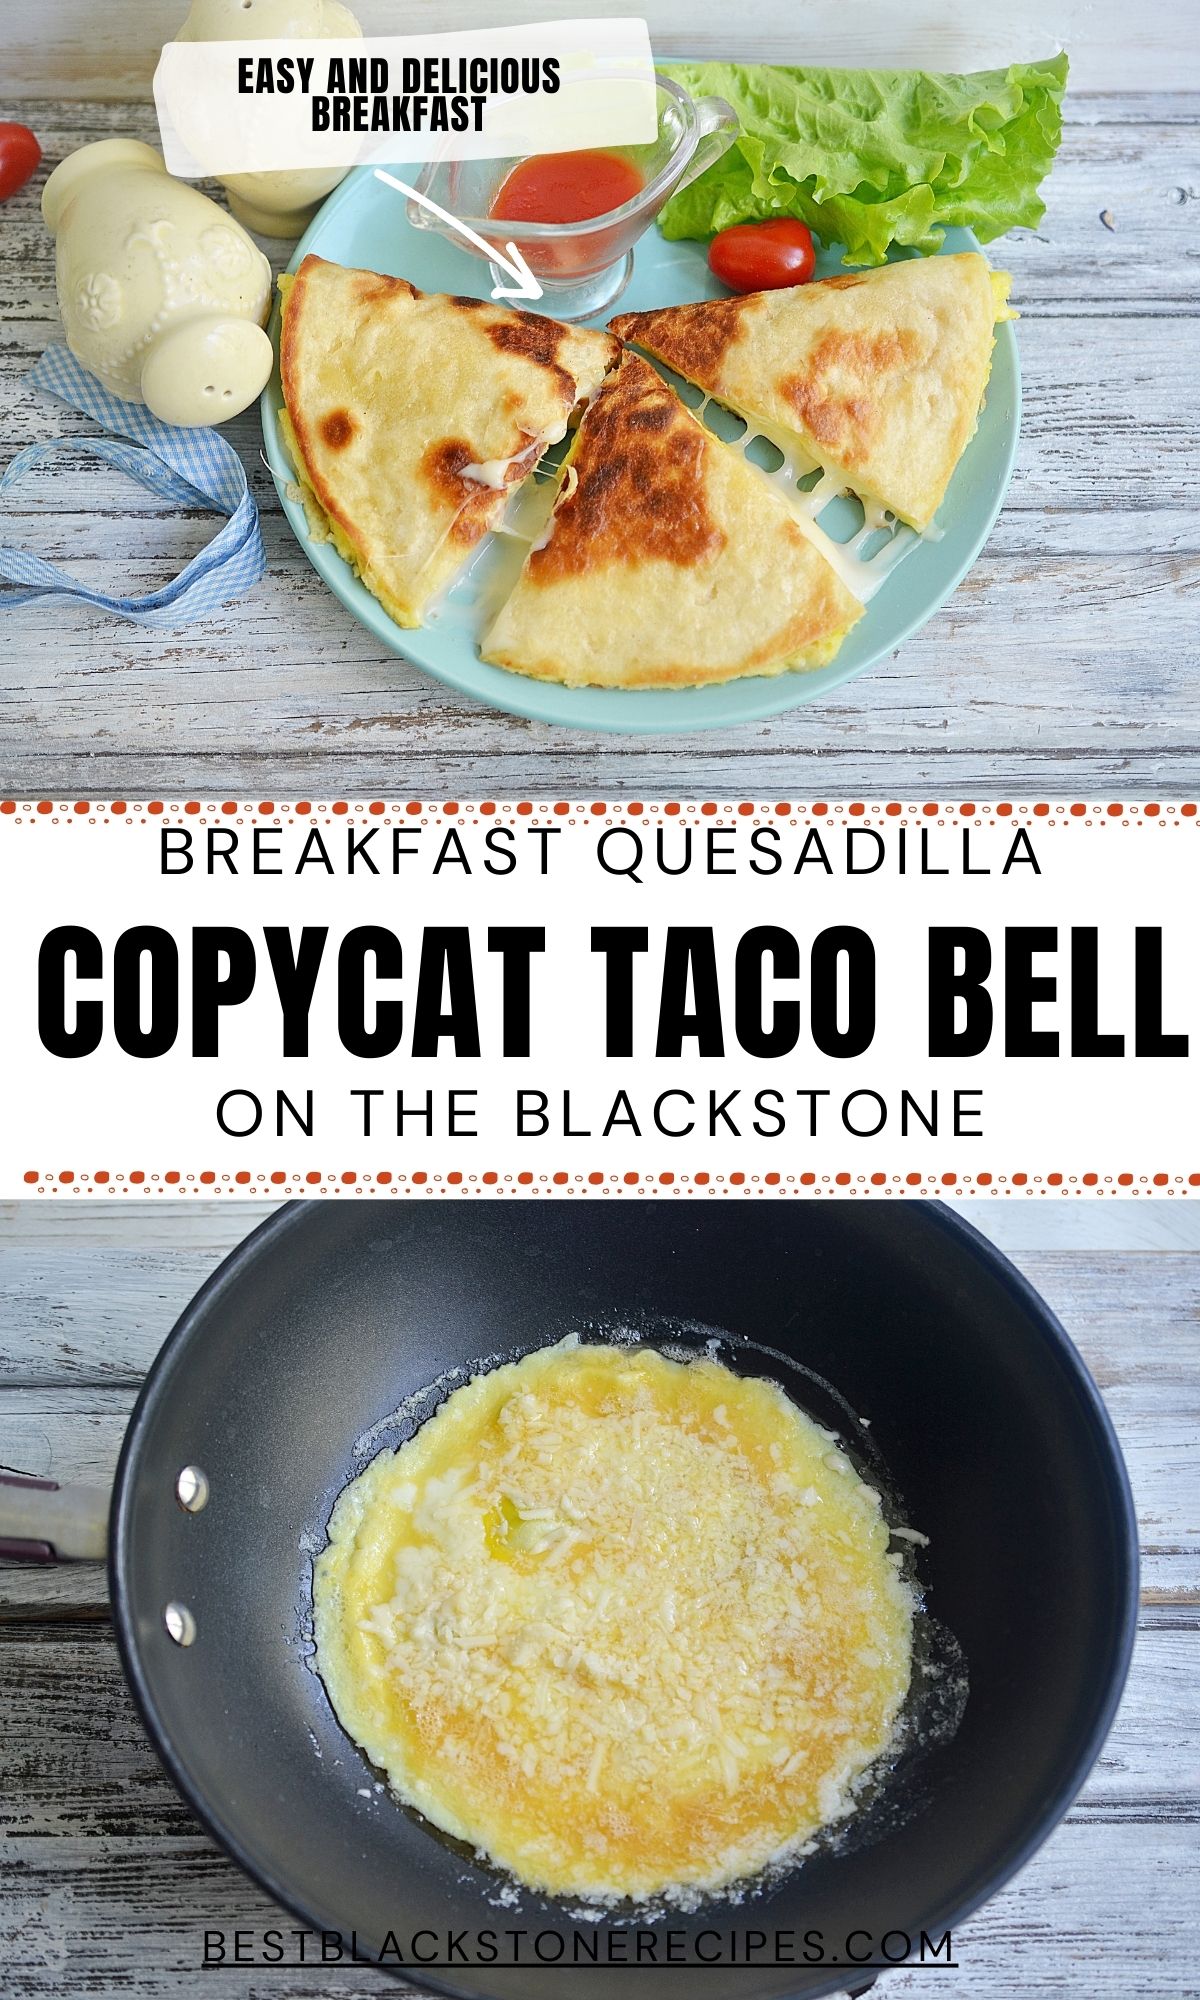 Breakfast quesadilla copycat taco bell on the blackstone.